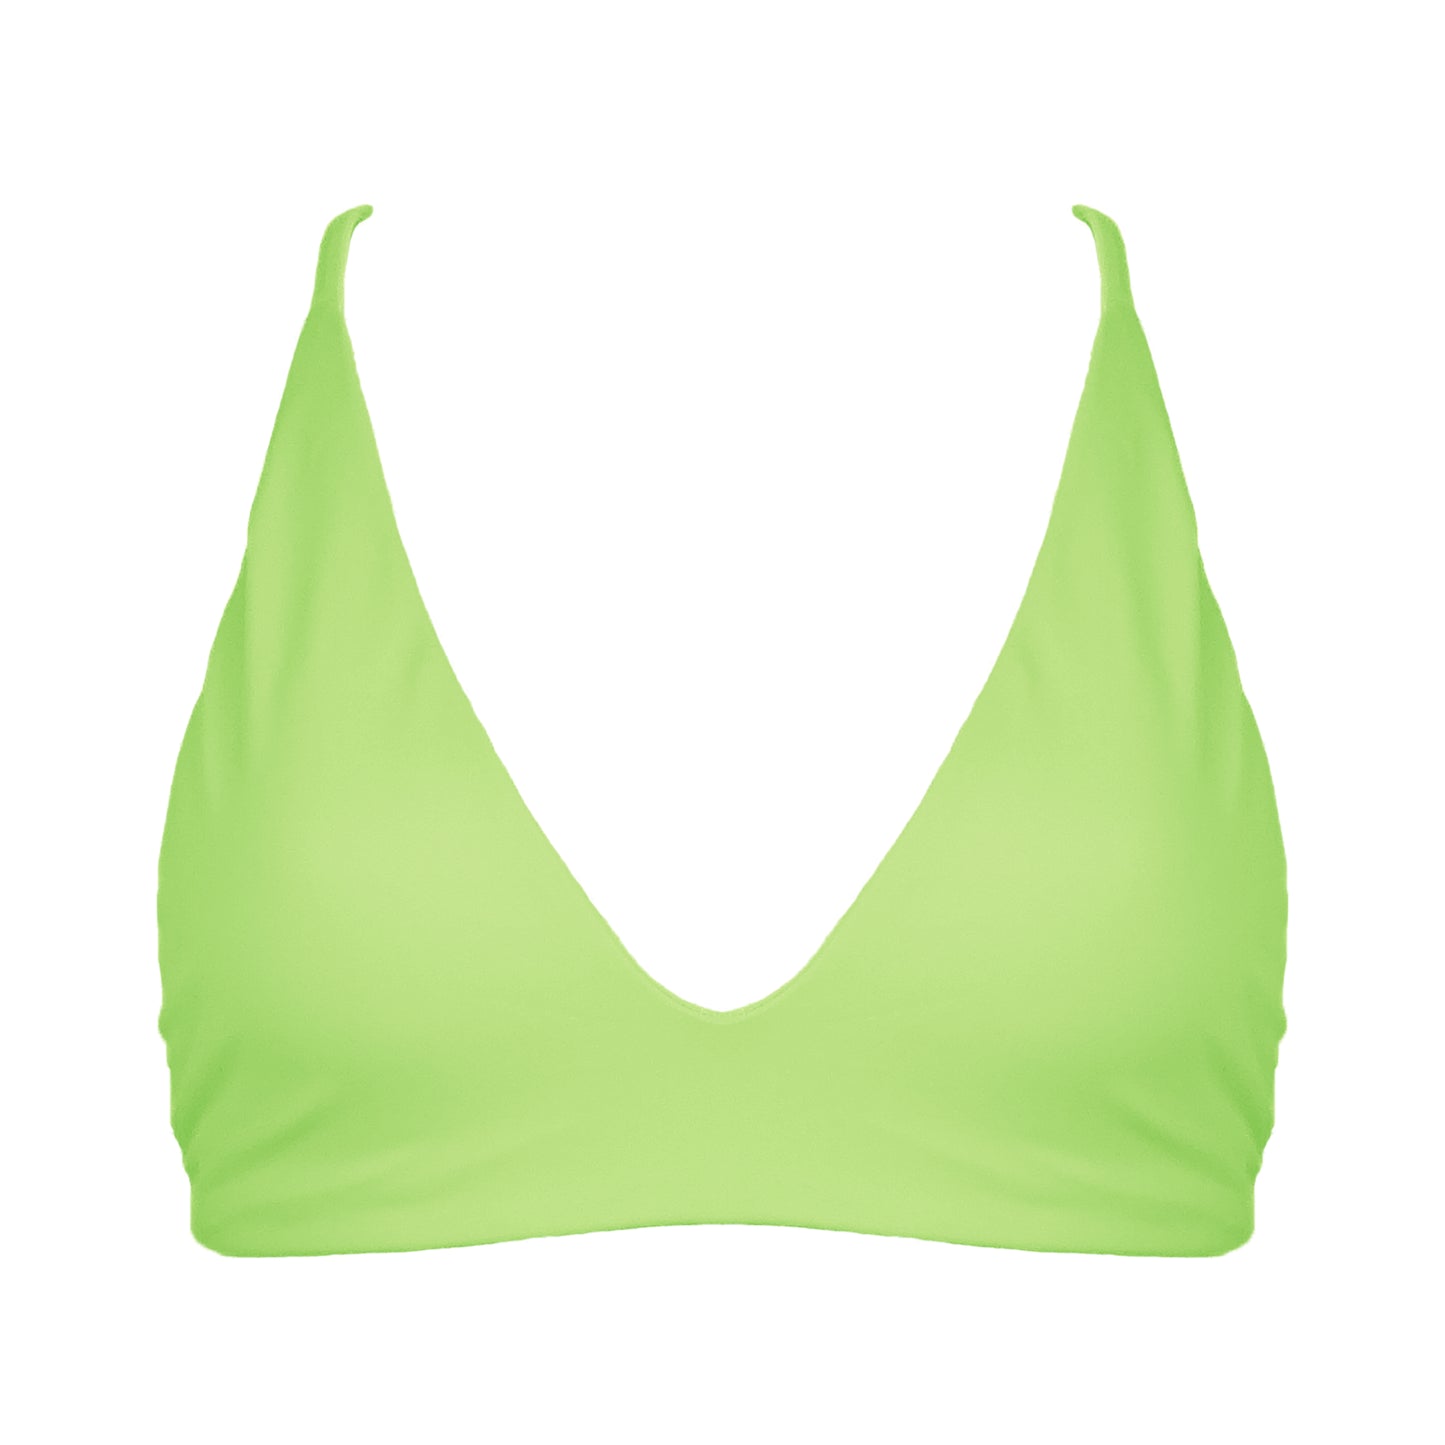 Light neon green Bralette style, triangle bikini top with plunging v-neckline, adjustable tie back strap and adjustable shoulder straps. 